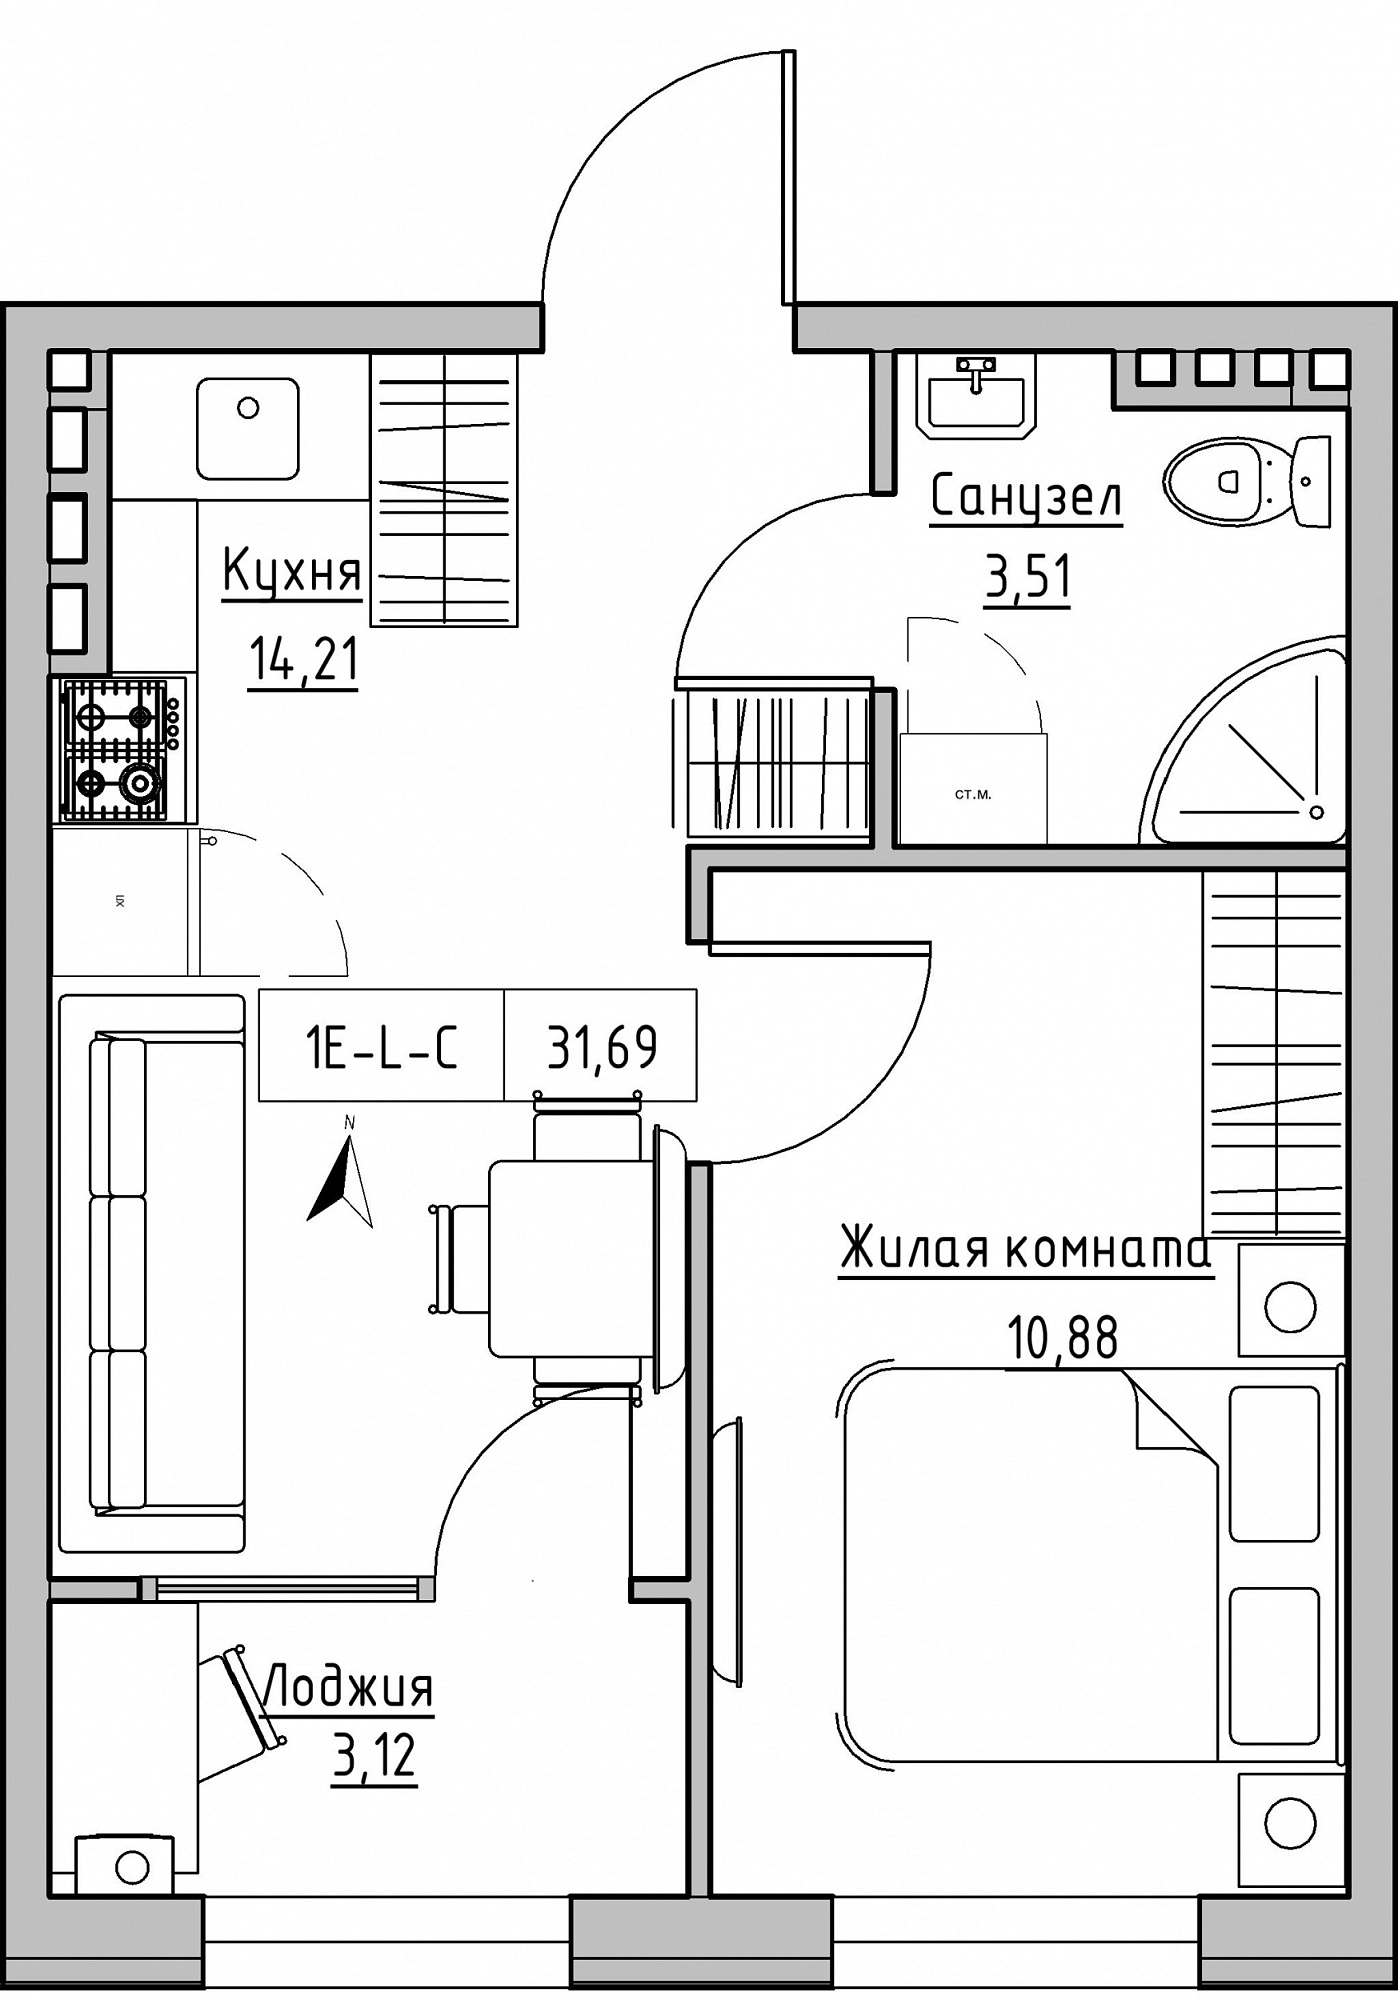 Planning 1-rm flats area 31.69m2, KS-024-03/0007.